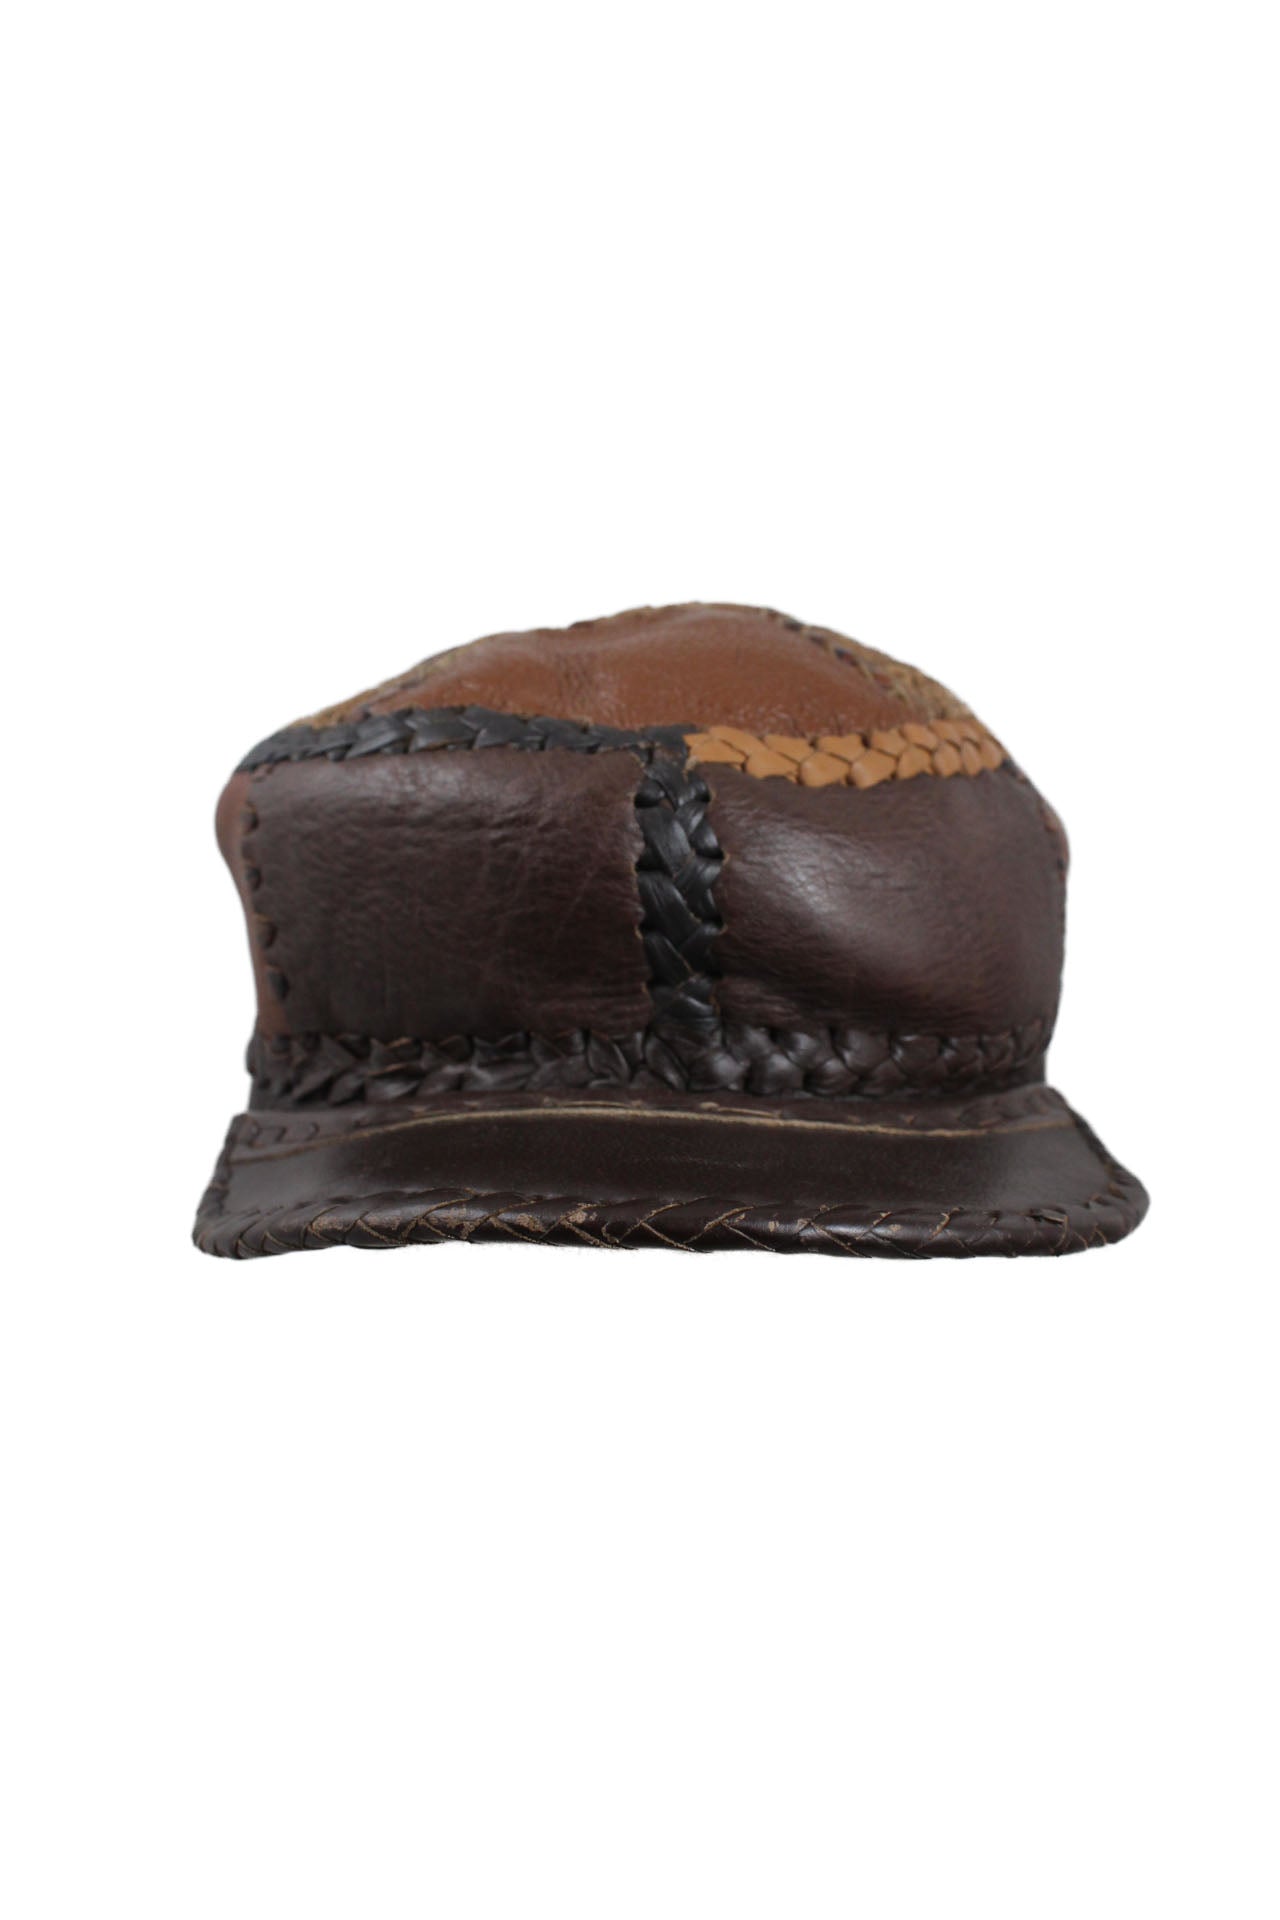 description: vintage brown tones leather patchwork hat. features patchwork design throughout with braided hem. 